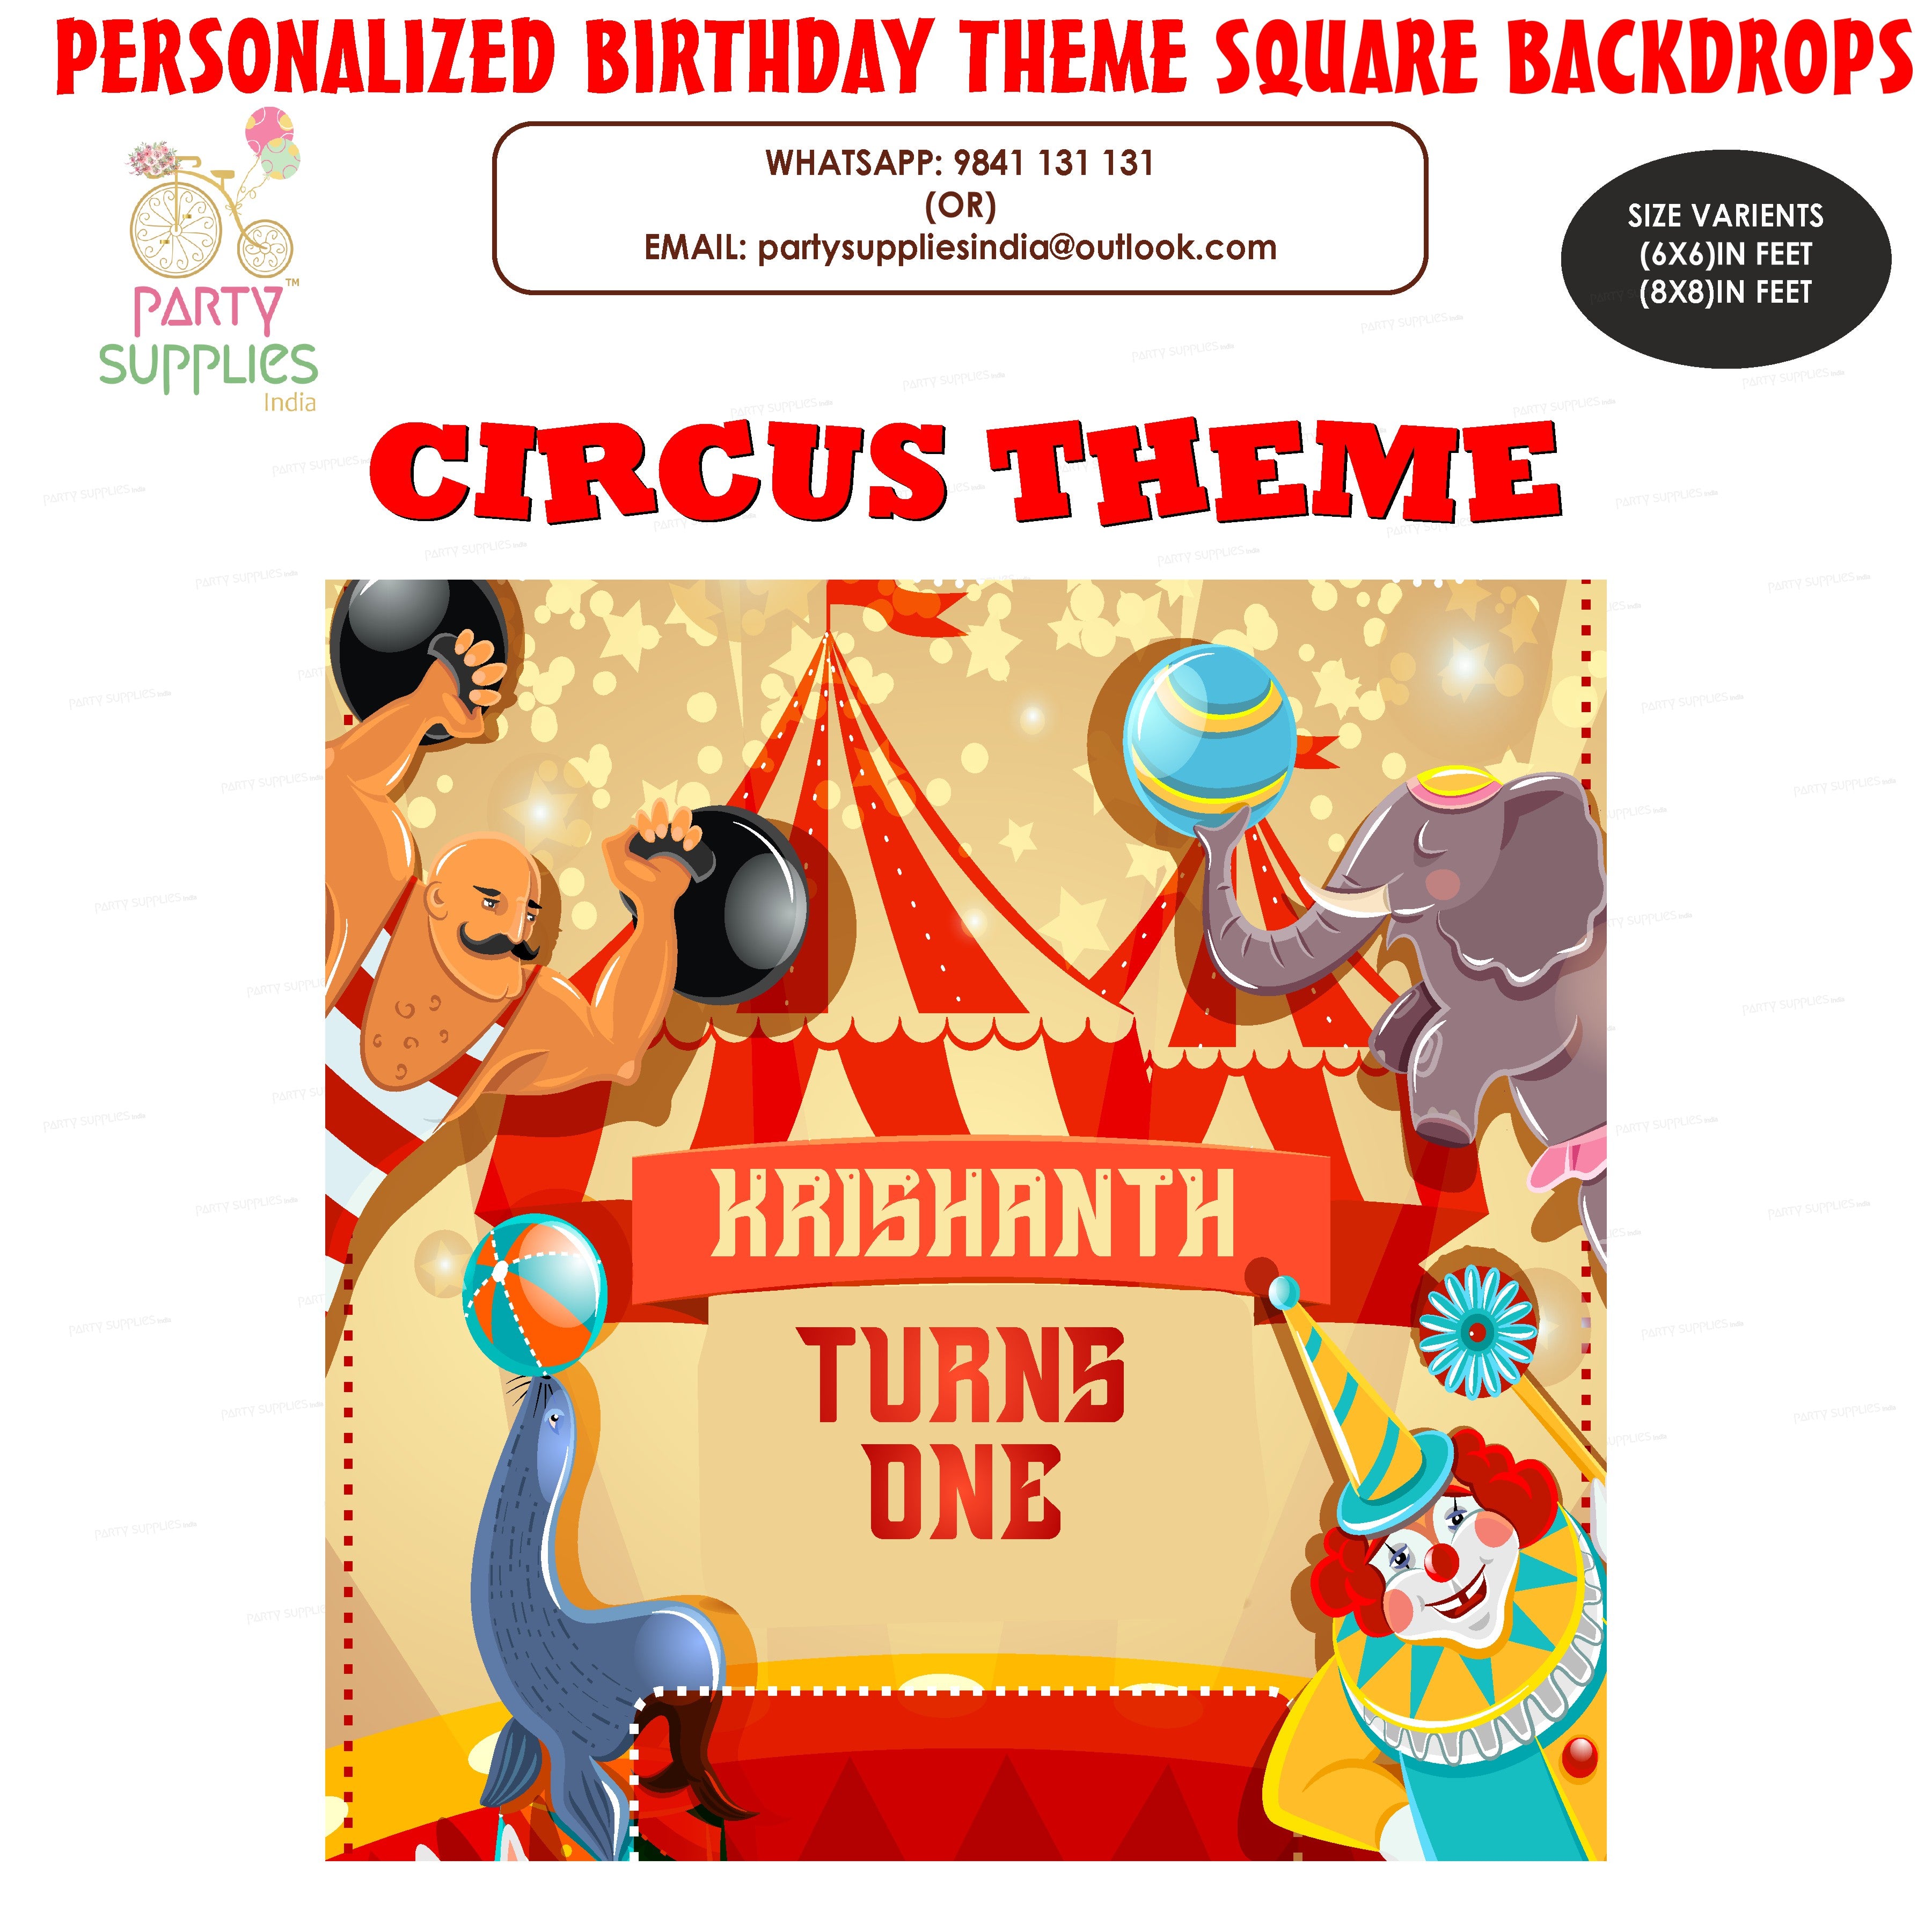 PSI Circus Theme Personalized Square Backdrop